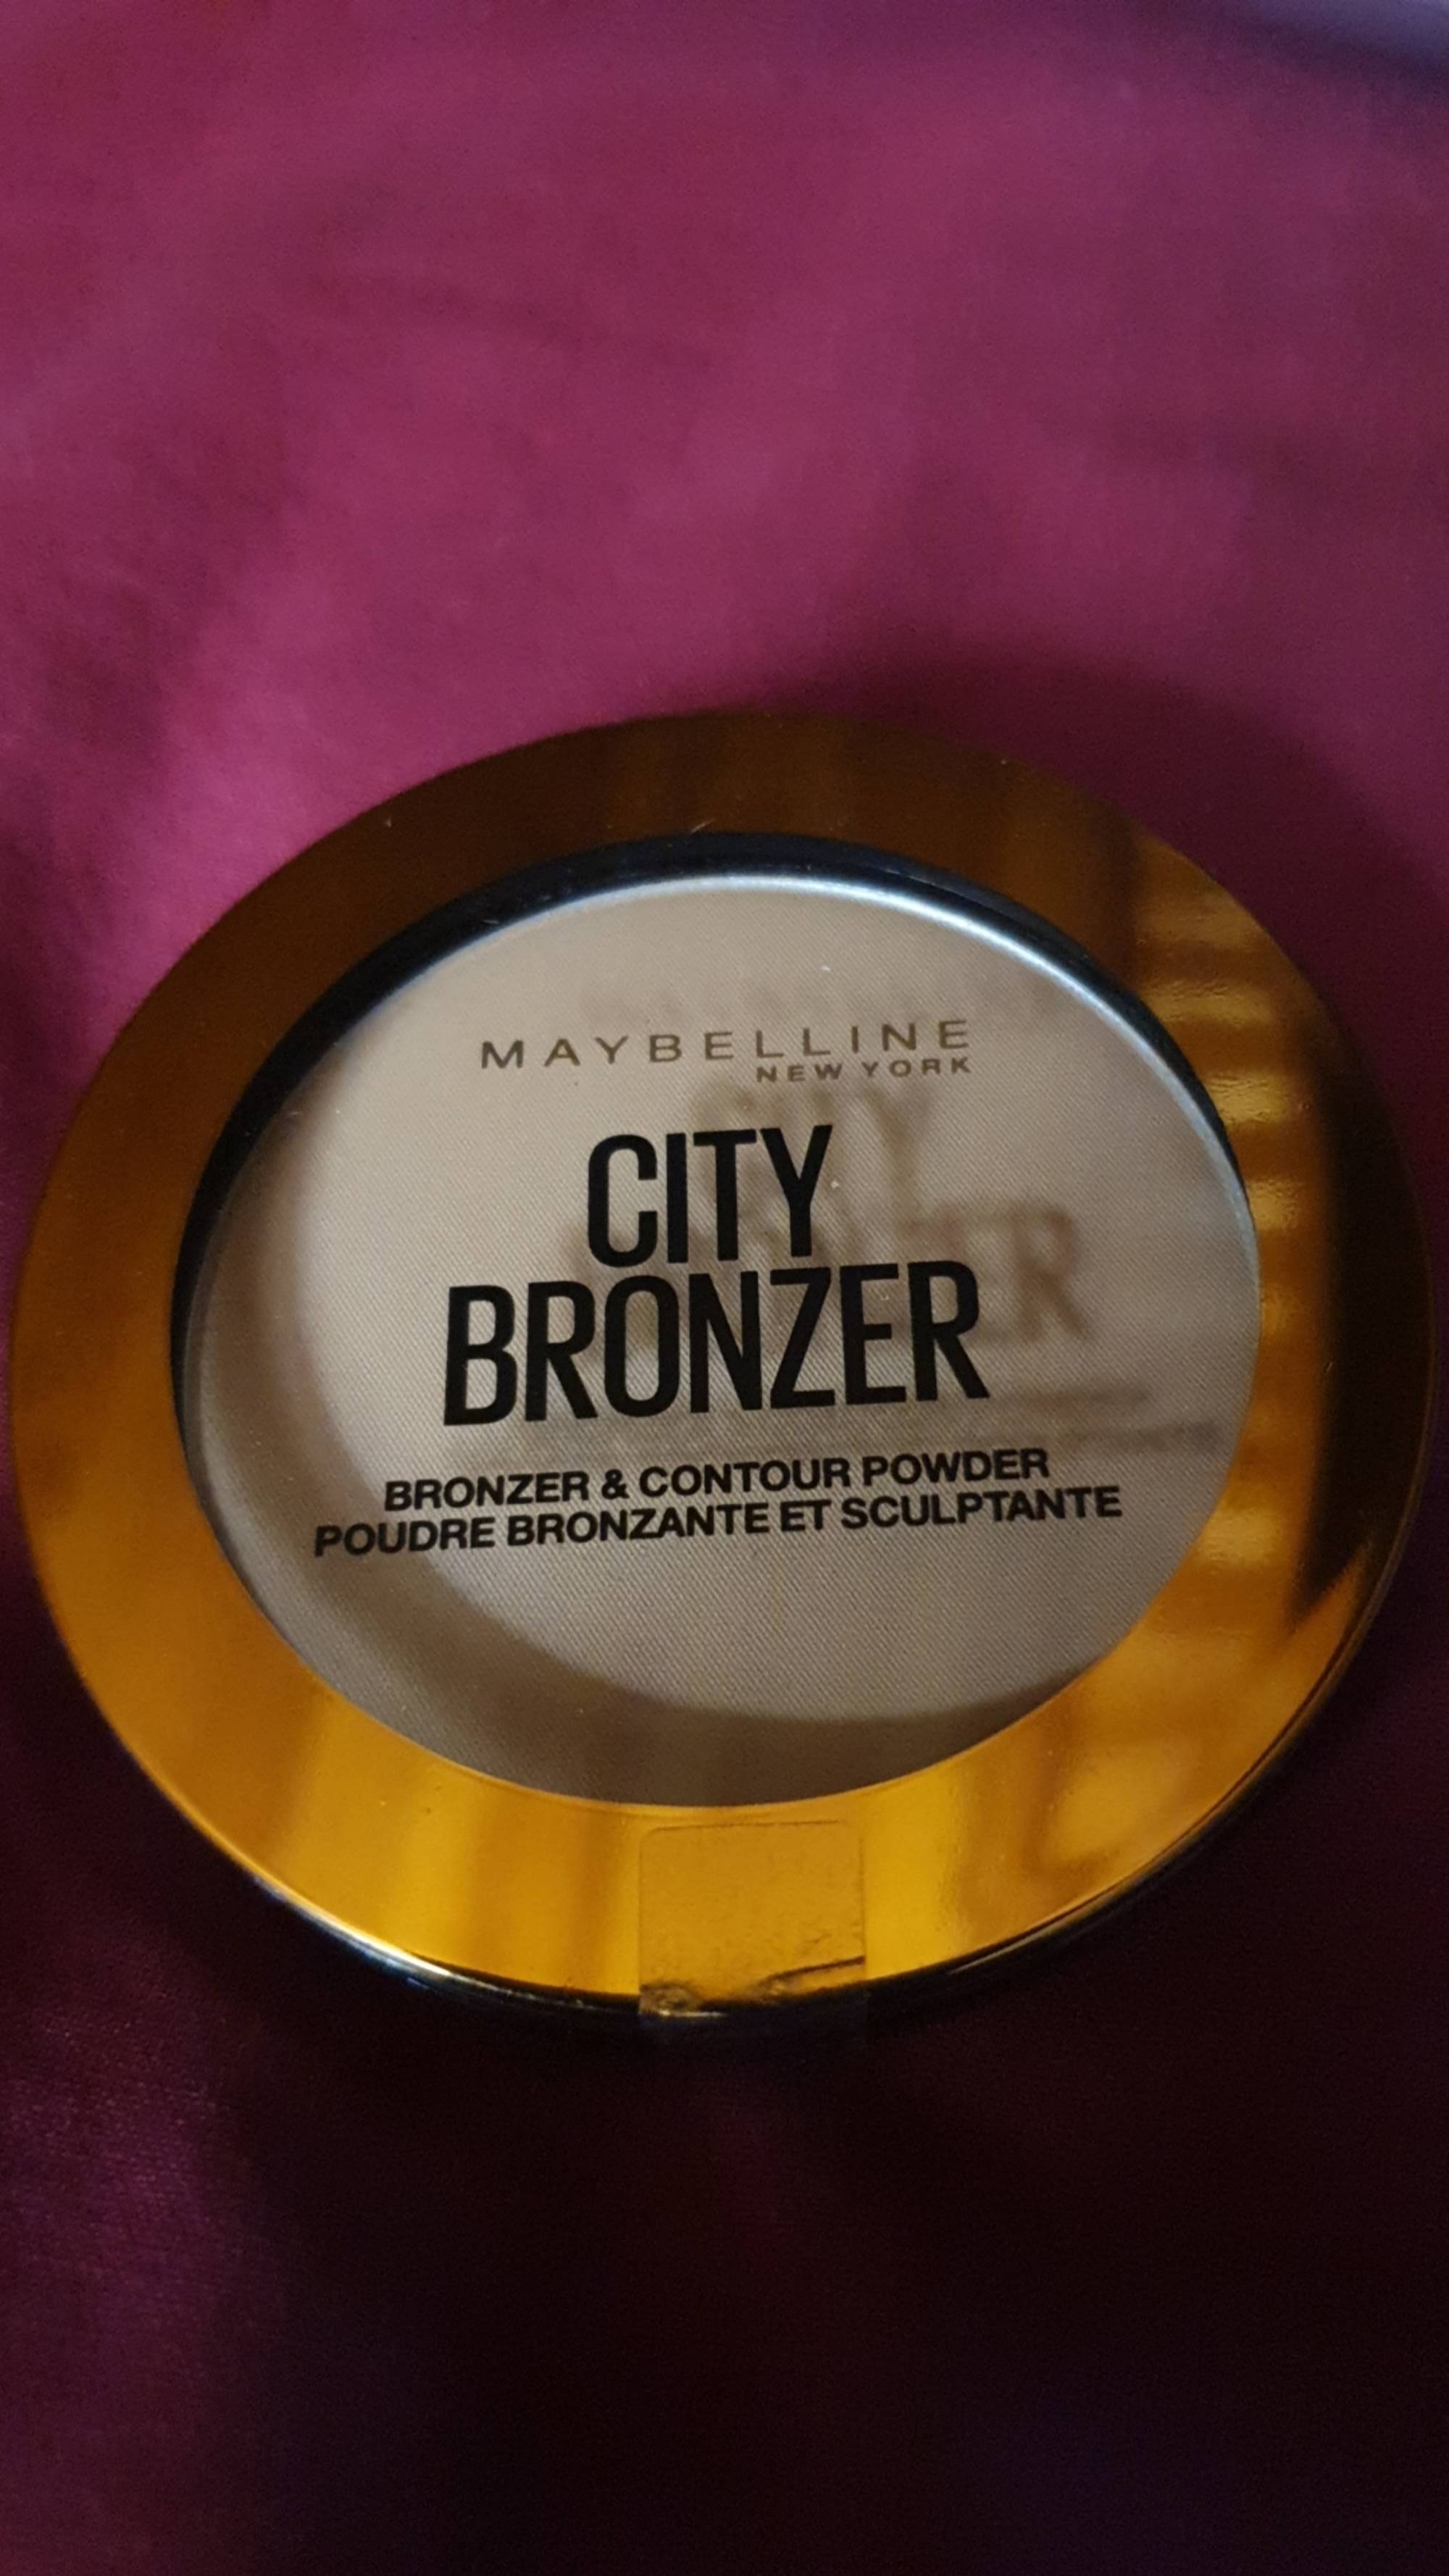 MAYBELLINE - City bronzer - Poudre bronzante et sculptante